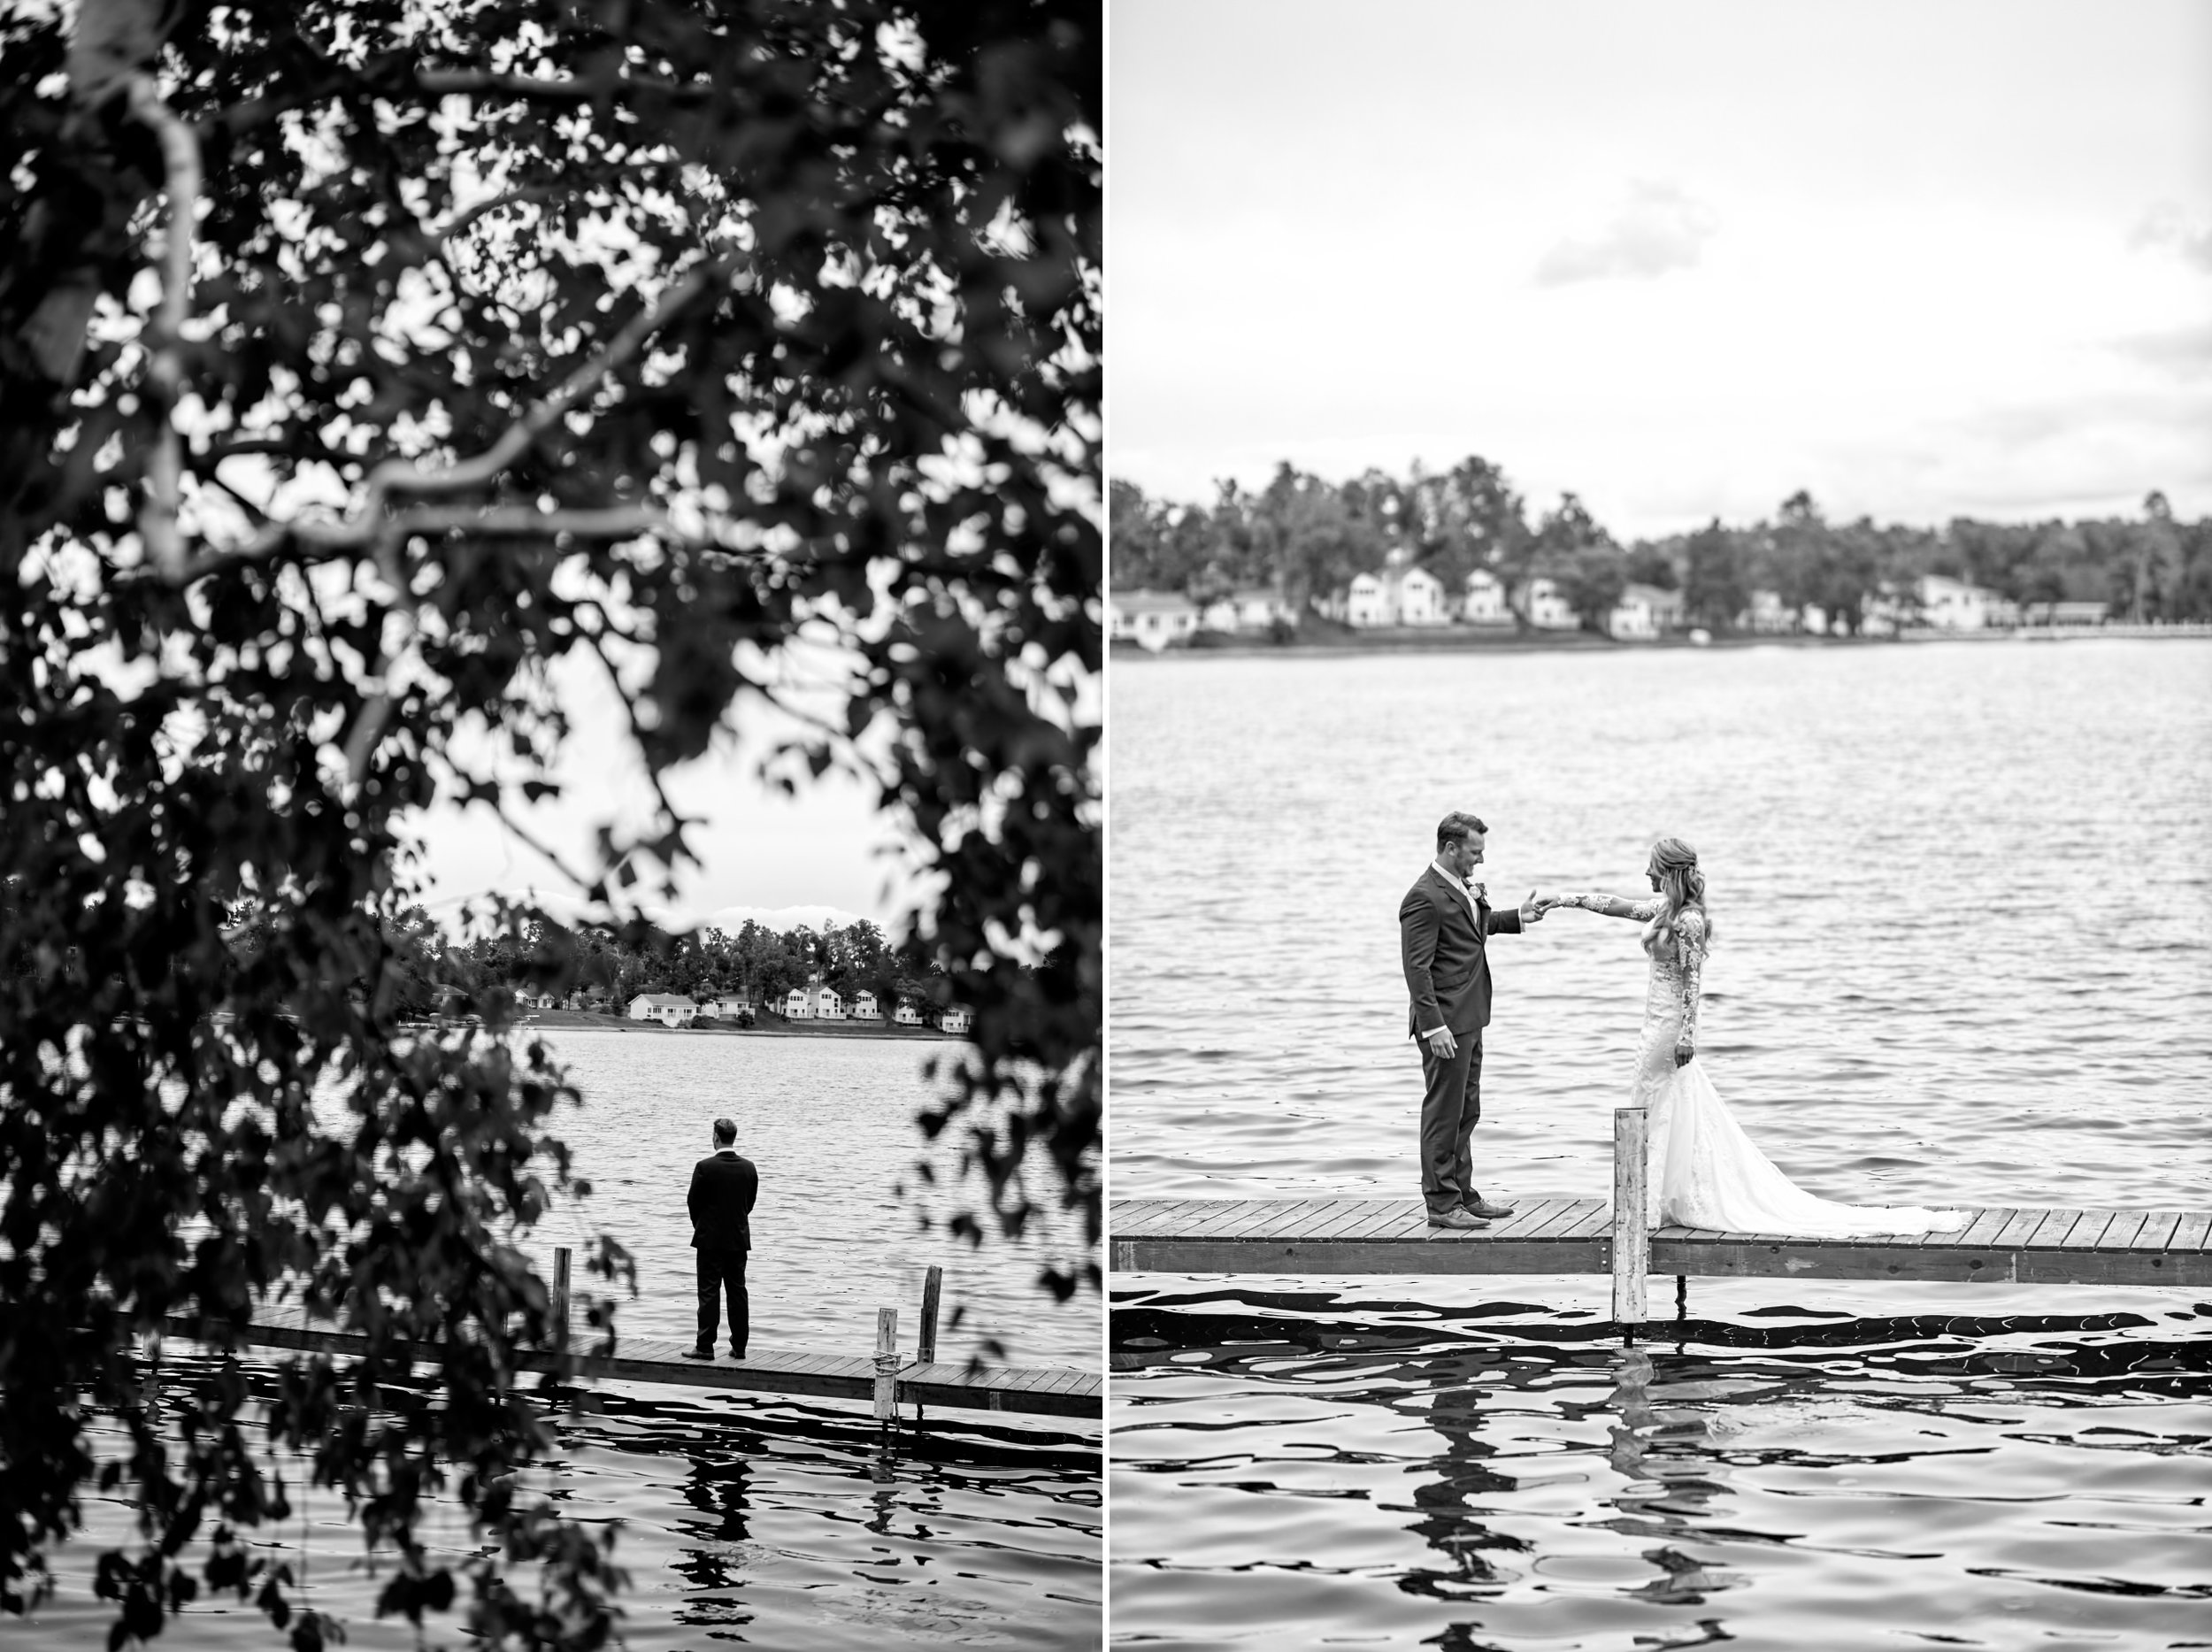 Craguns On Gull Lakes Wedding In Summer